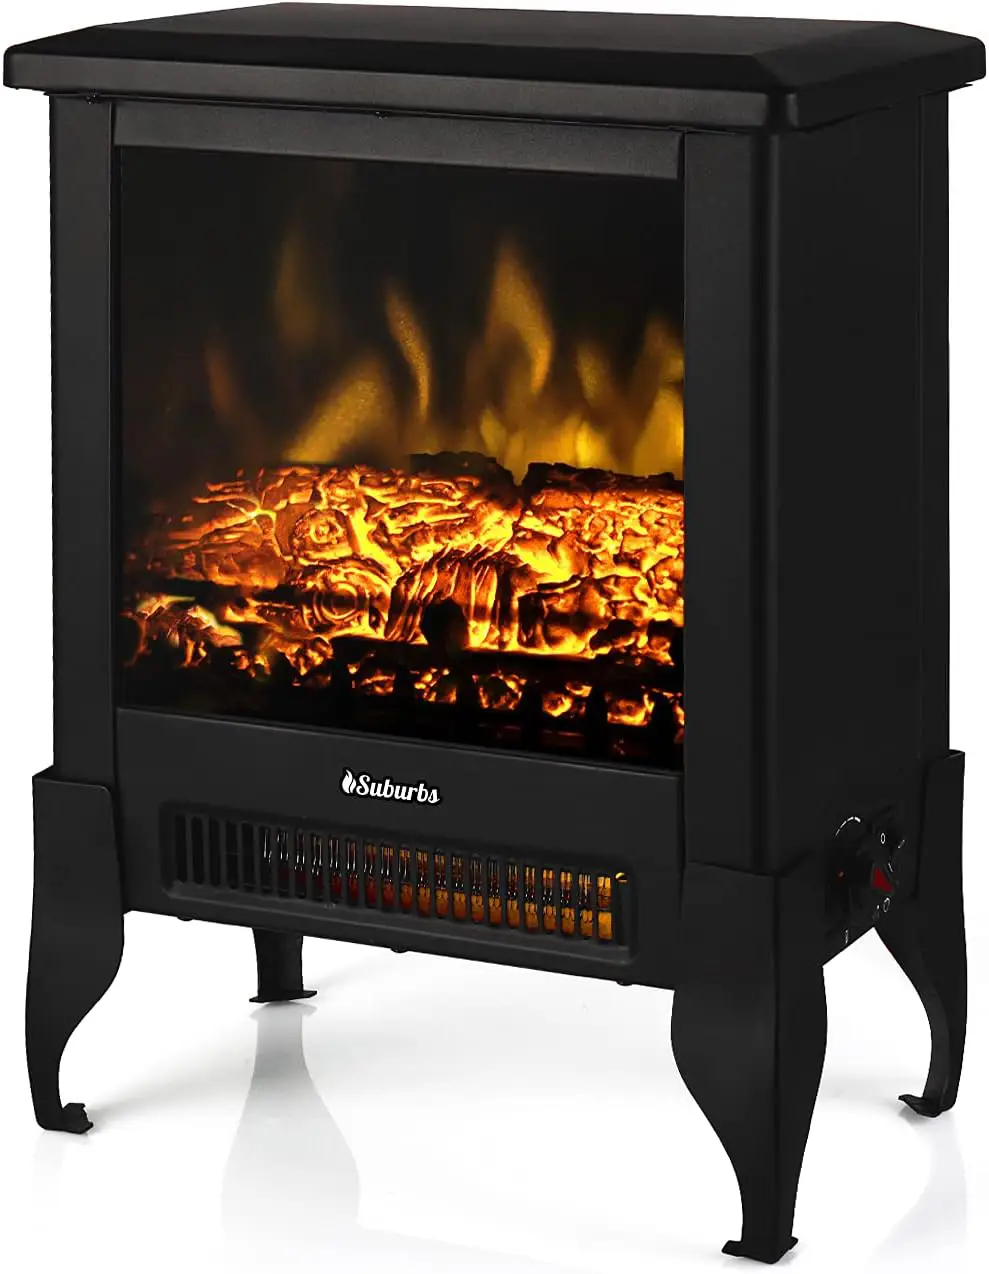 TURBRO Suburbs TS17 Compact Electric Fireplace